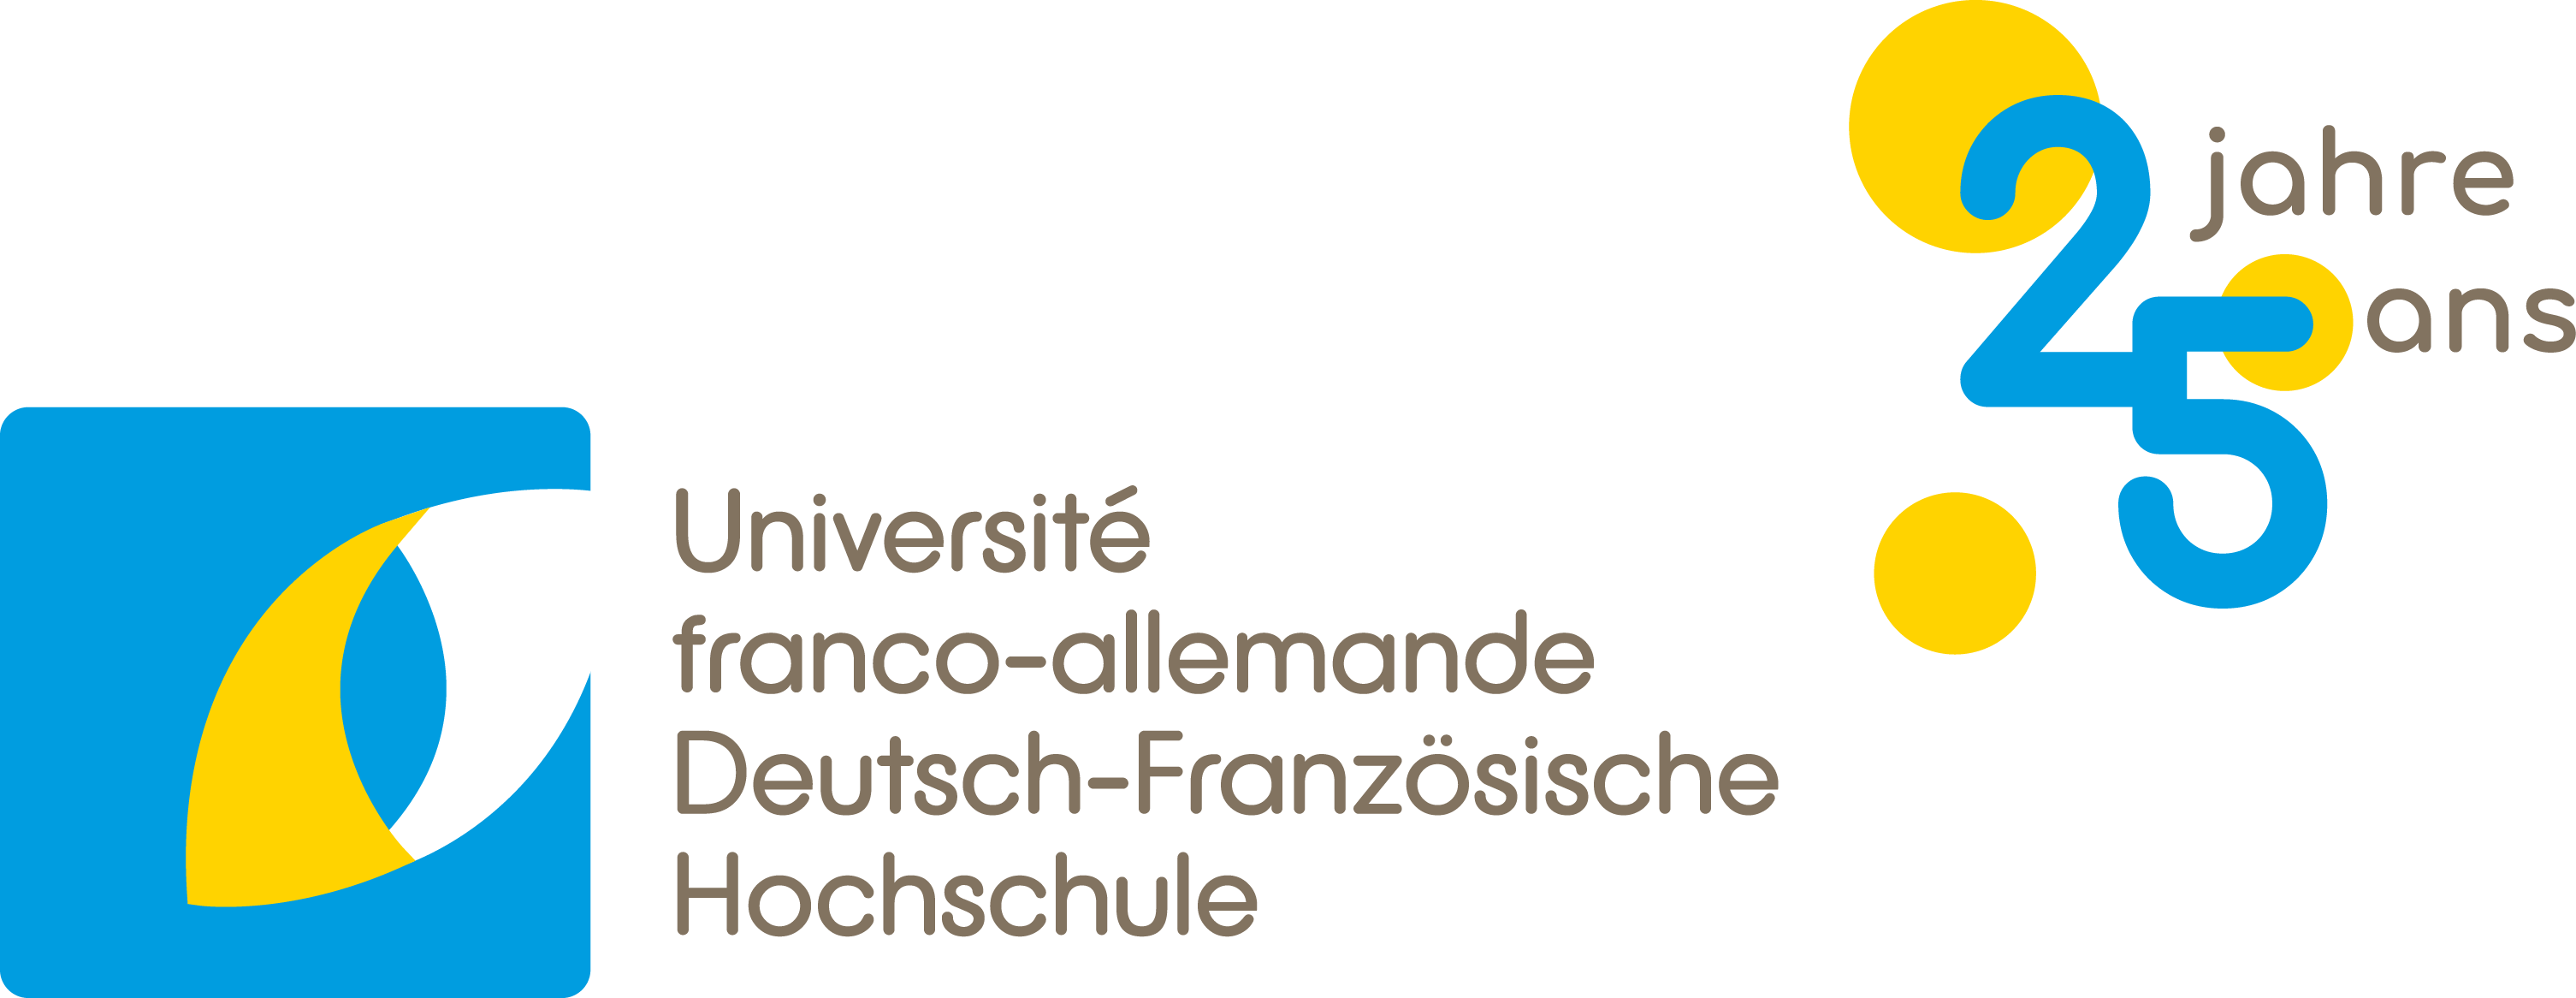 French-german-university